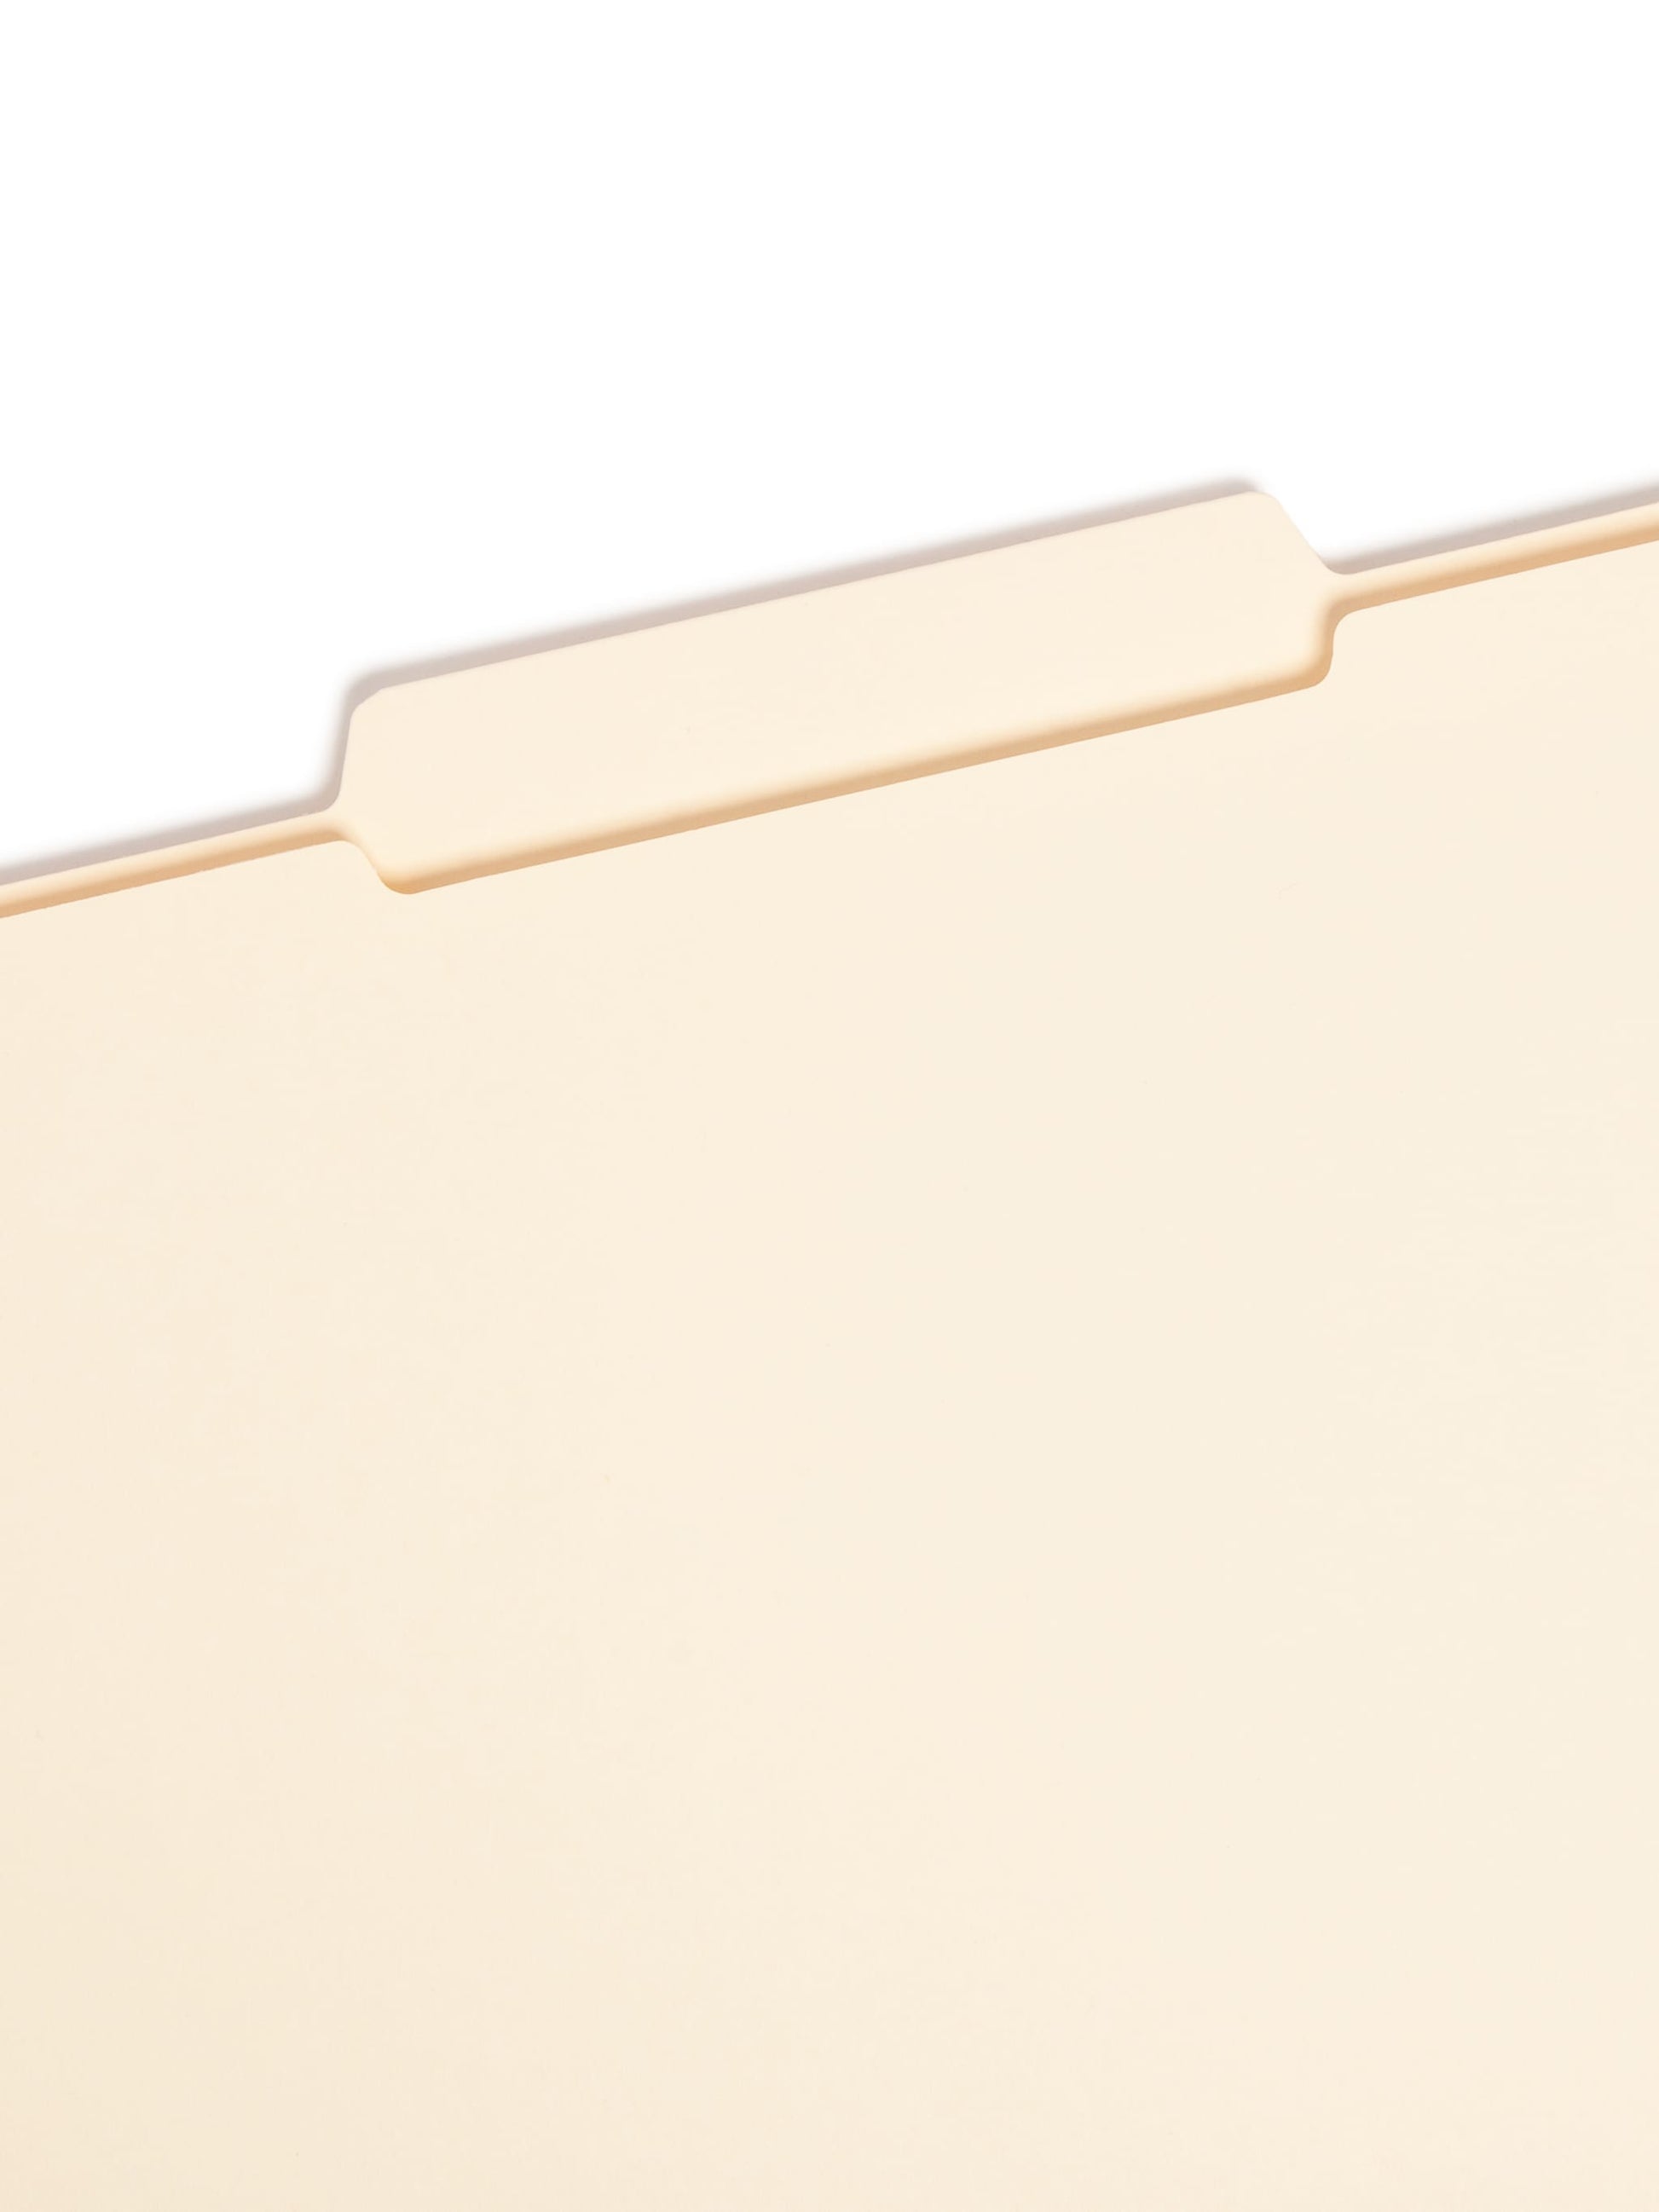 Reinforced Tab File Folders, 1/3-Cut Center Tab, Manila Color, Legal Size, Set of 100, 086486153362